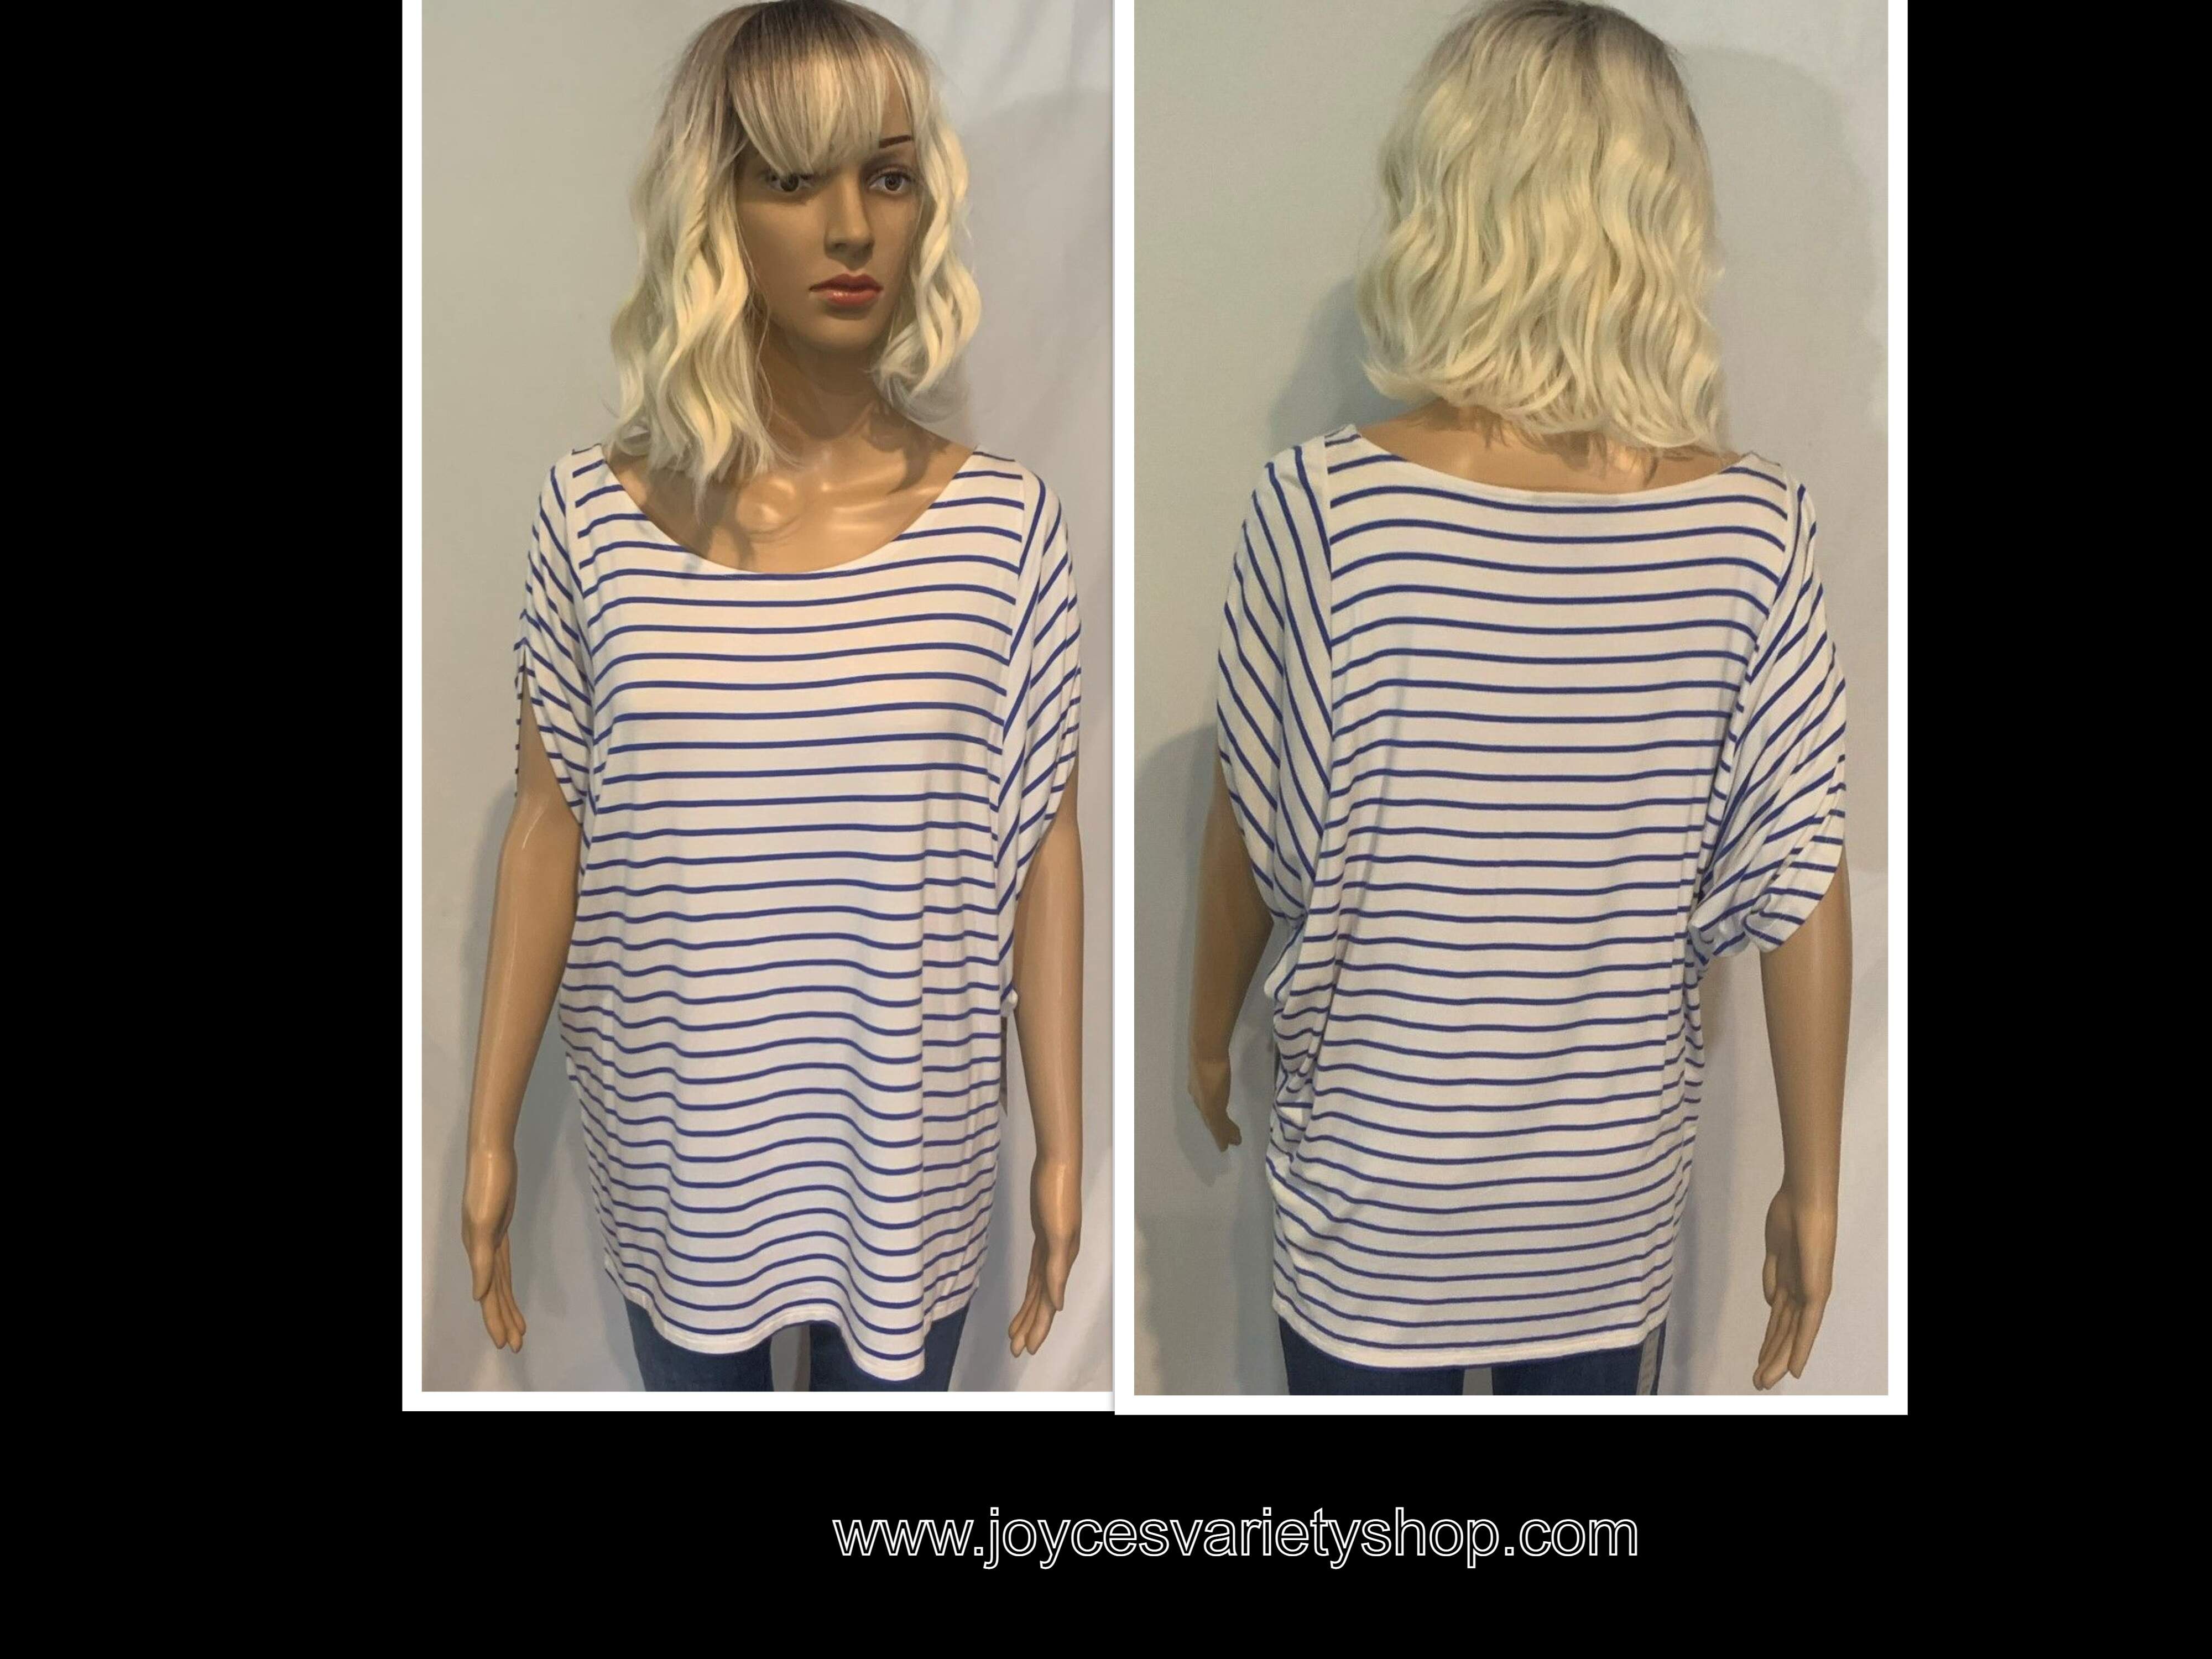 Dana Buchman Limited Quantity Blouse Top Shirt Striped Blue & White